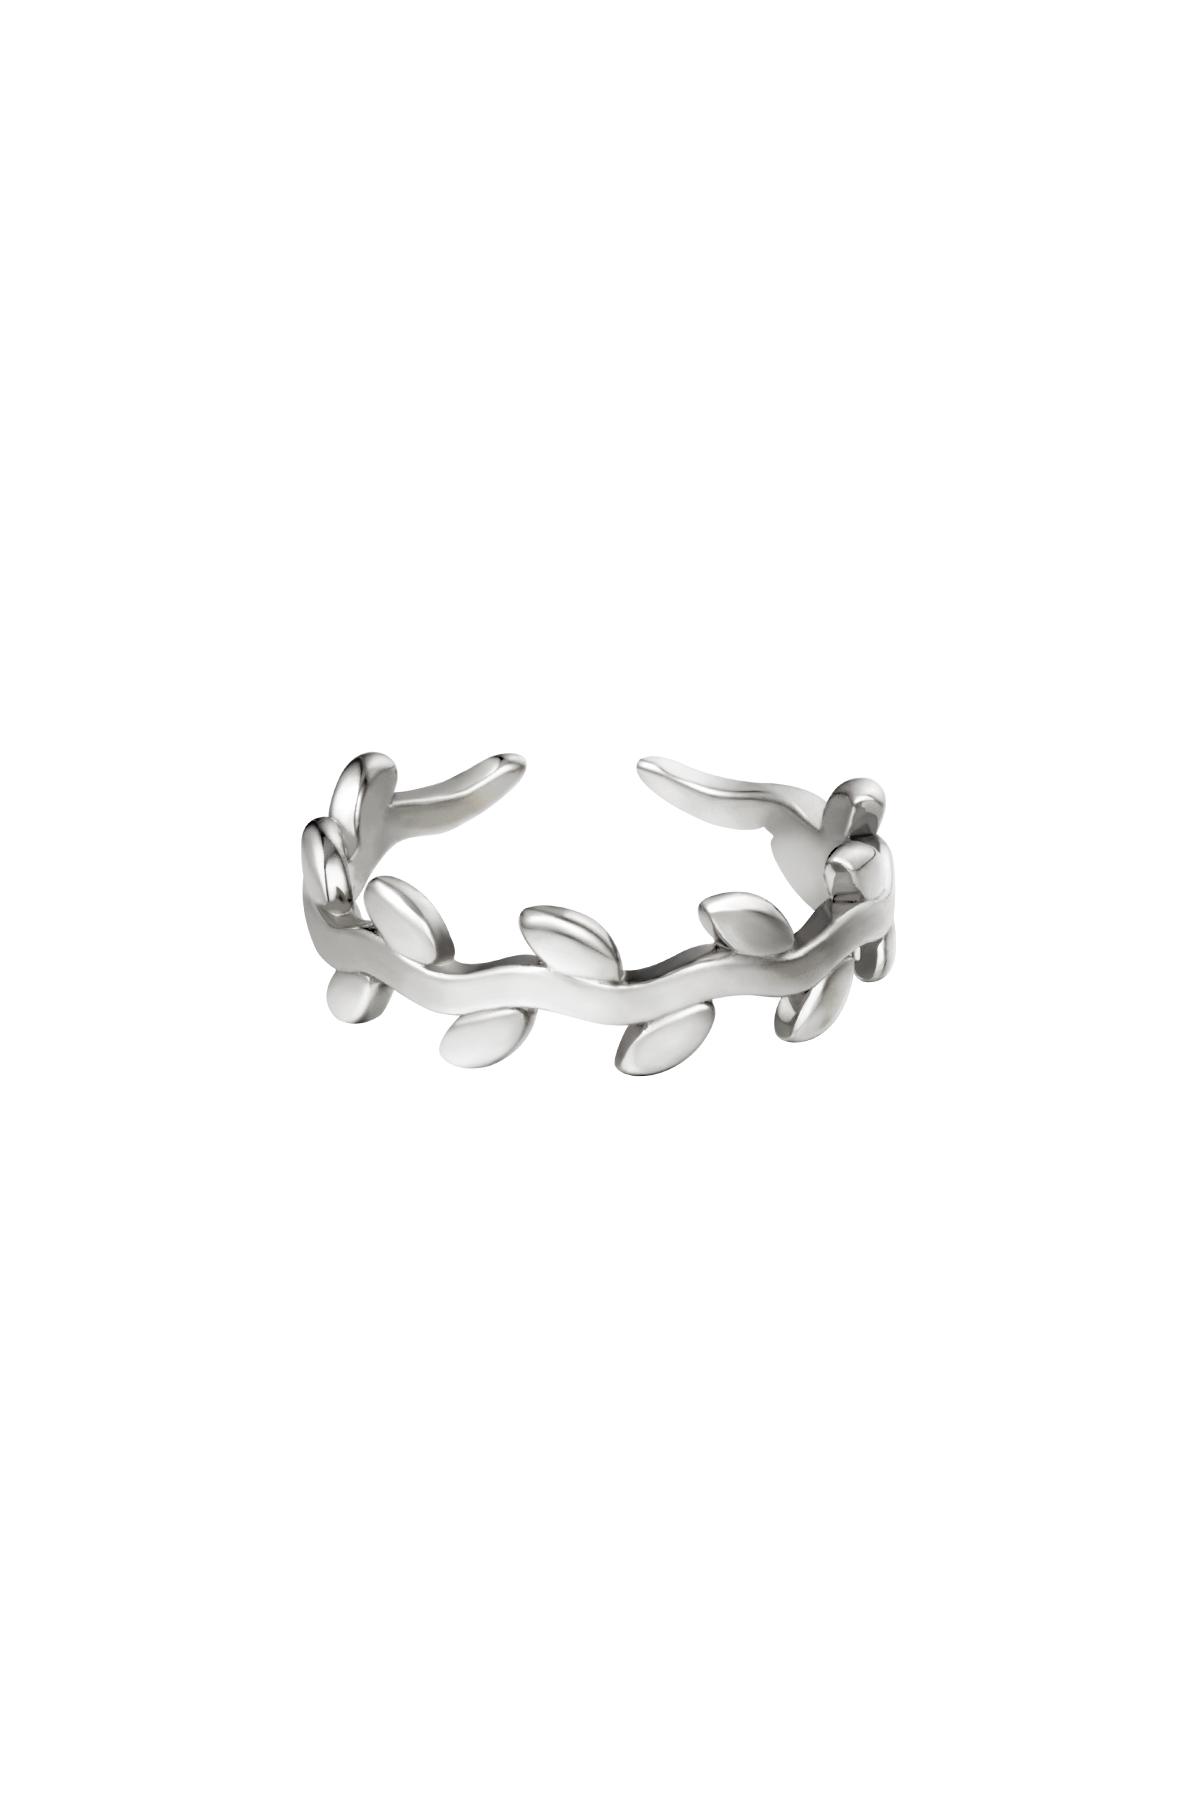 Stainless steel ring laurel wreath adjustable Silver